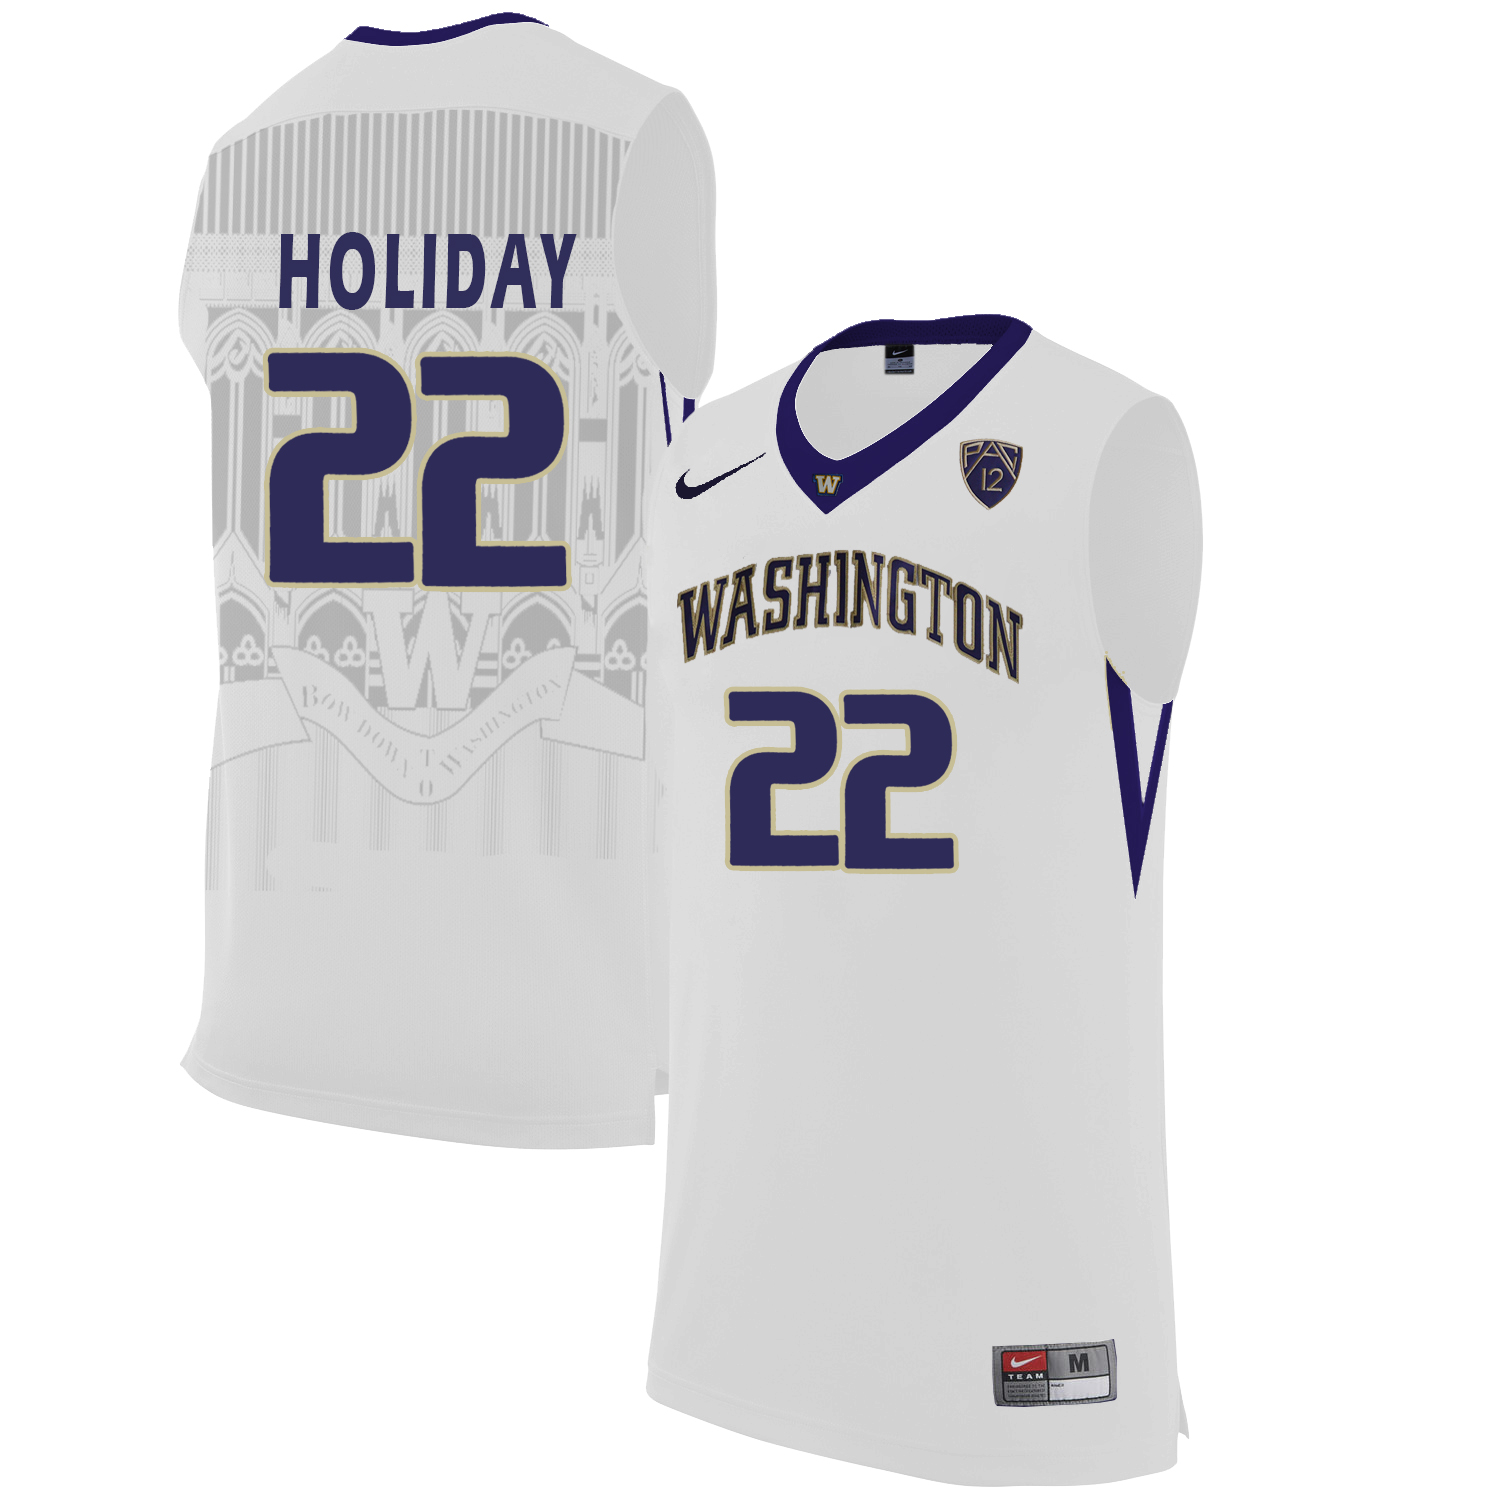 Washington Huskies 22 Justin Holiday White College Basketball Jersey